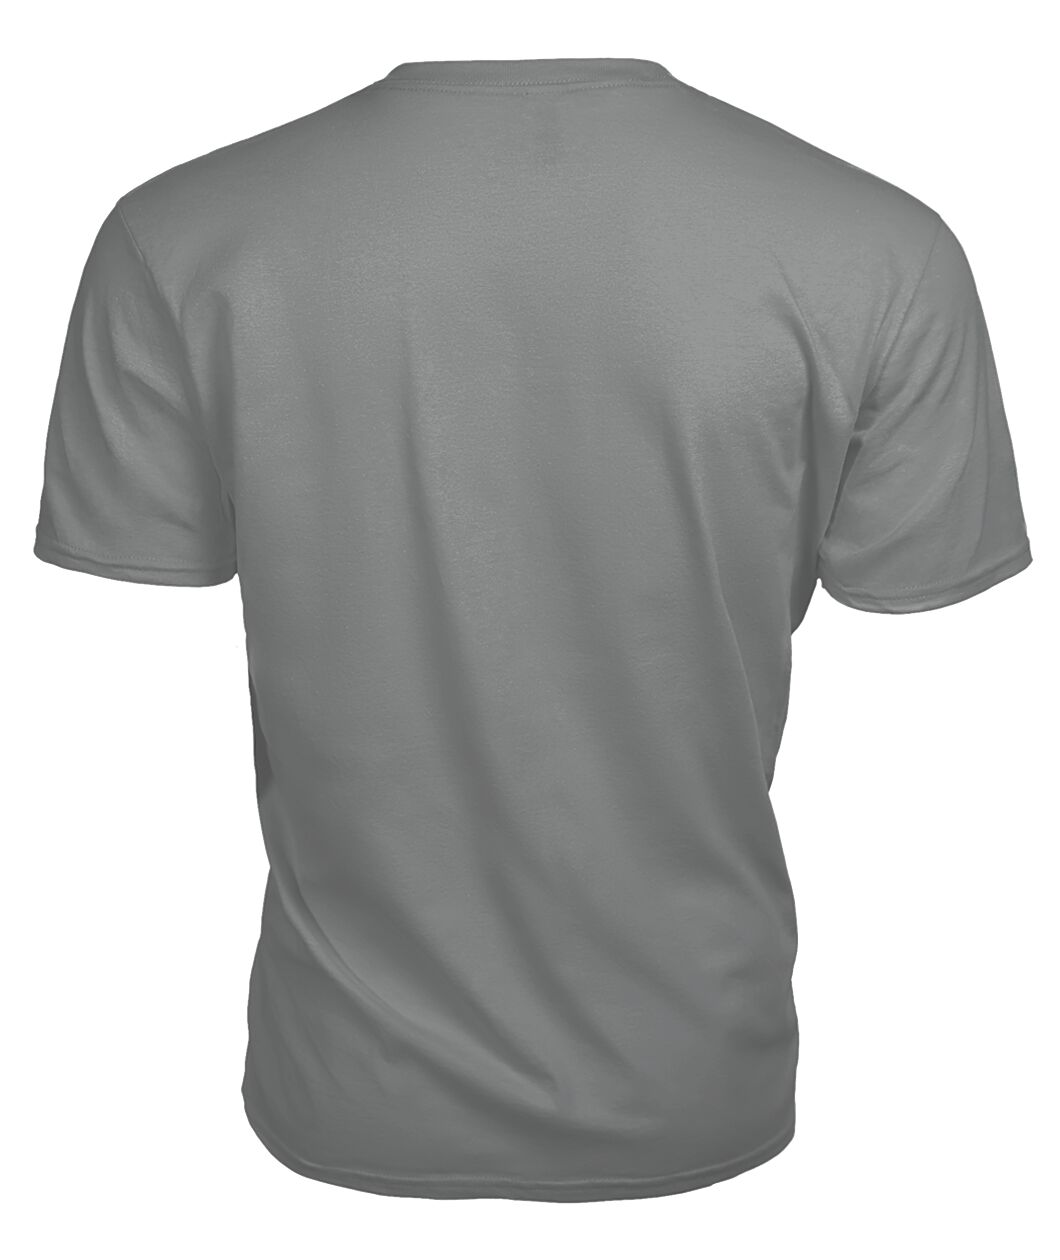 MacIver Family Tartan - 2D T-shirt